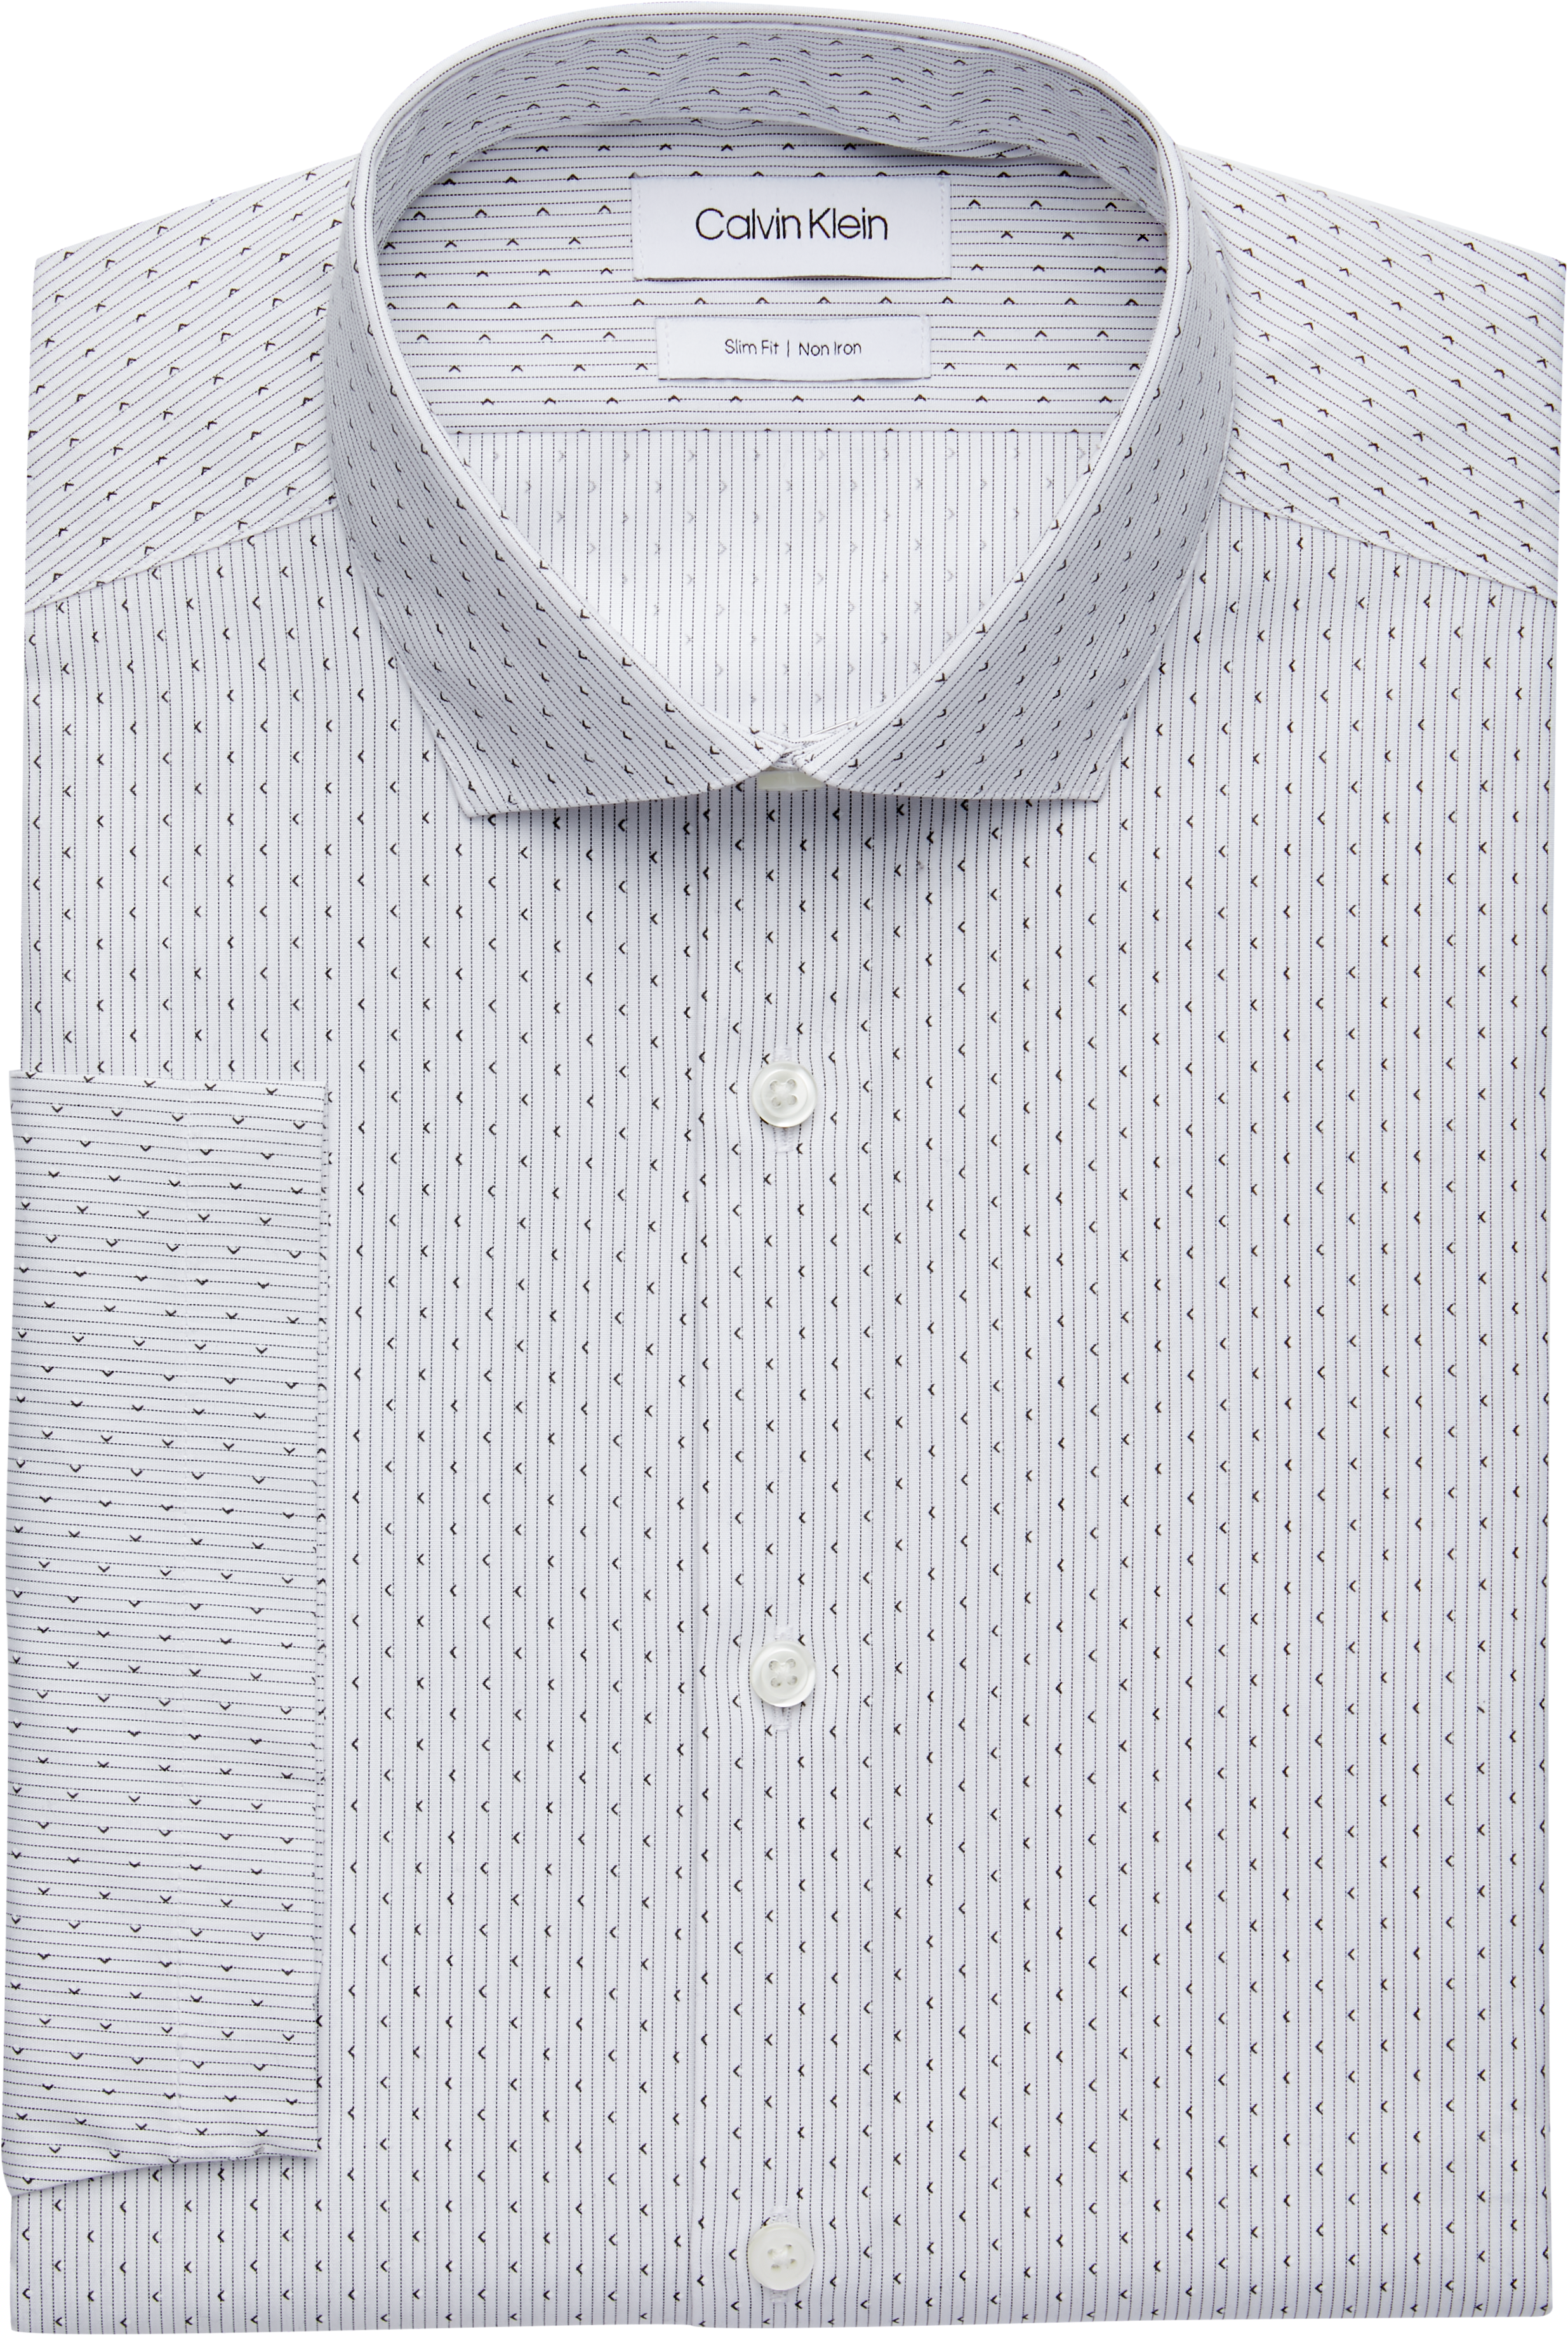 Calvin Klein Dove Gray Stripe Pattern Slim Fit Short Sleeve Dress Shirt ...